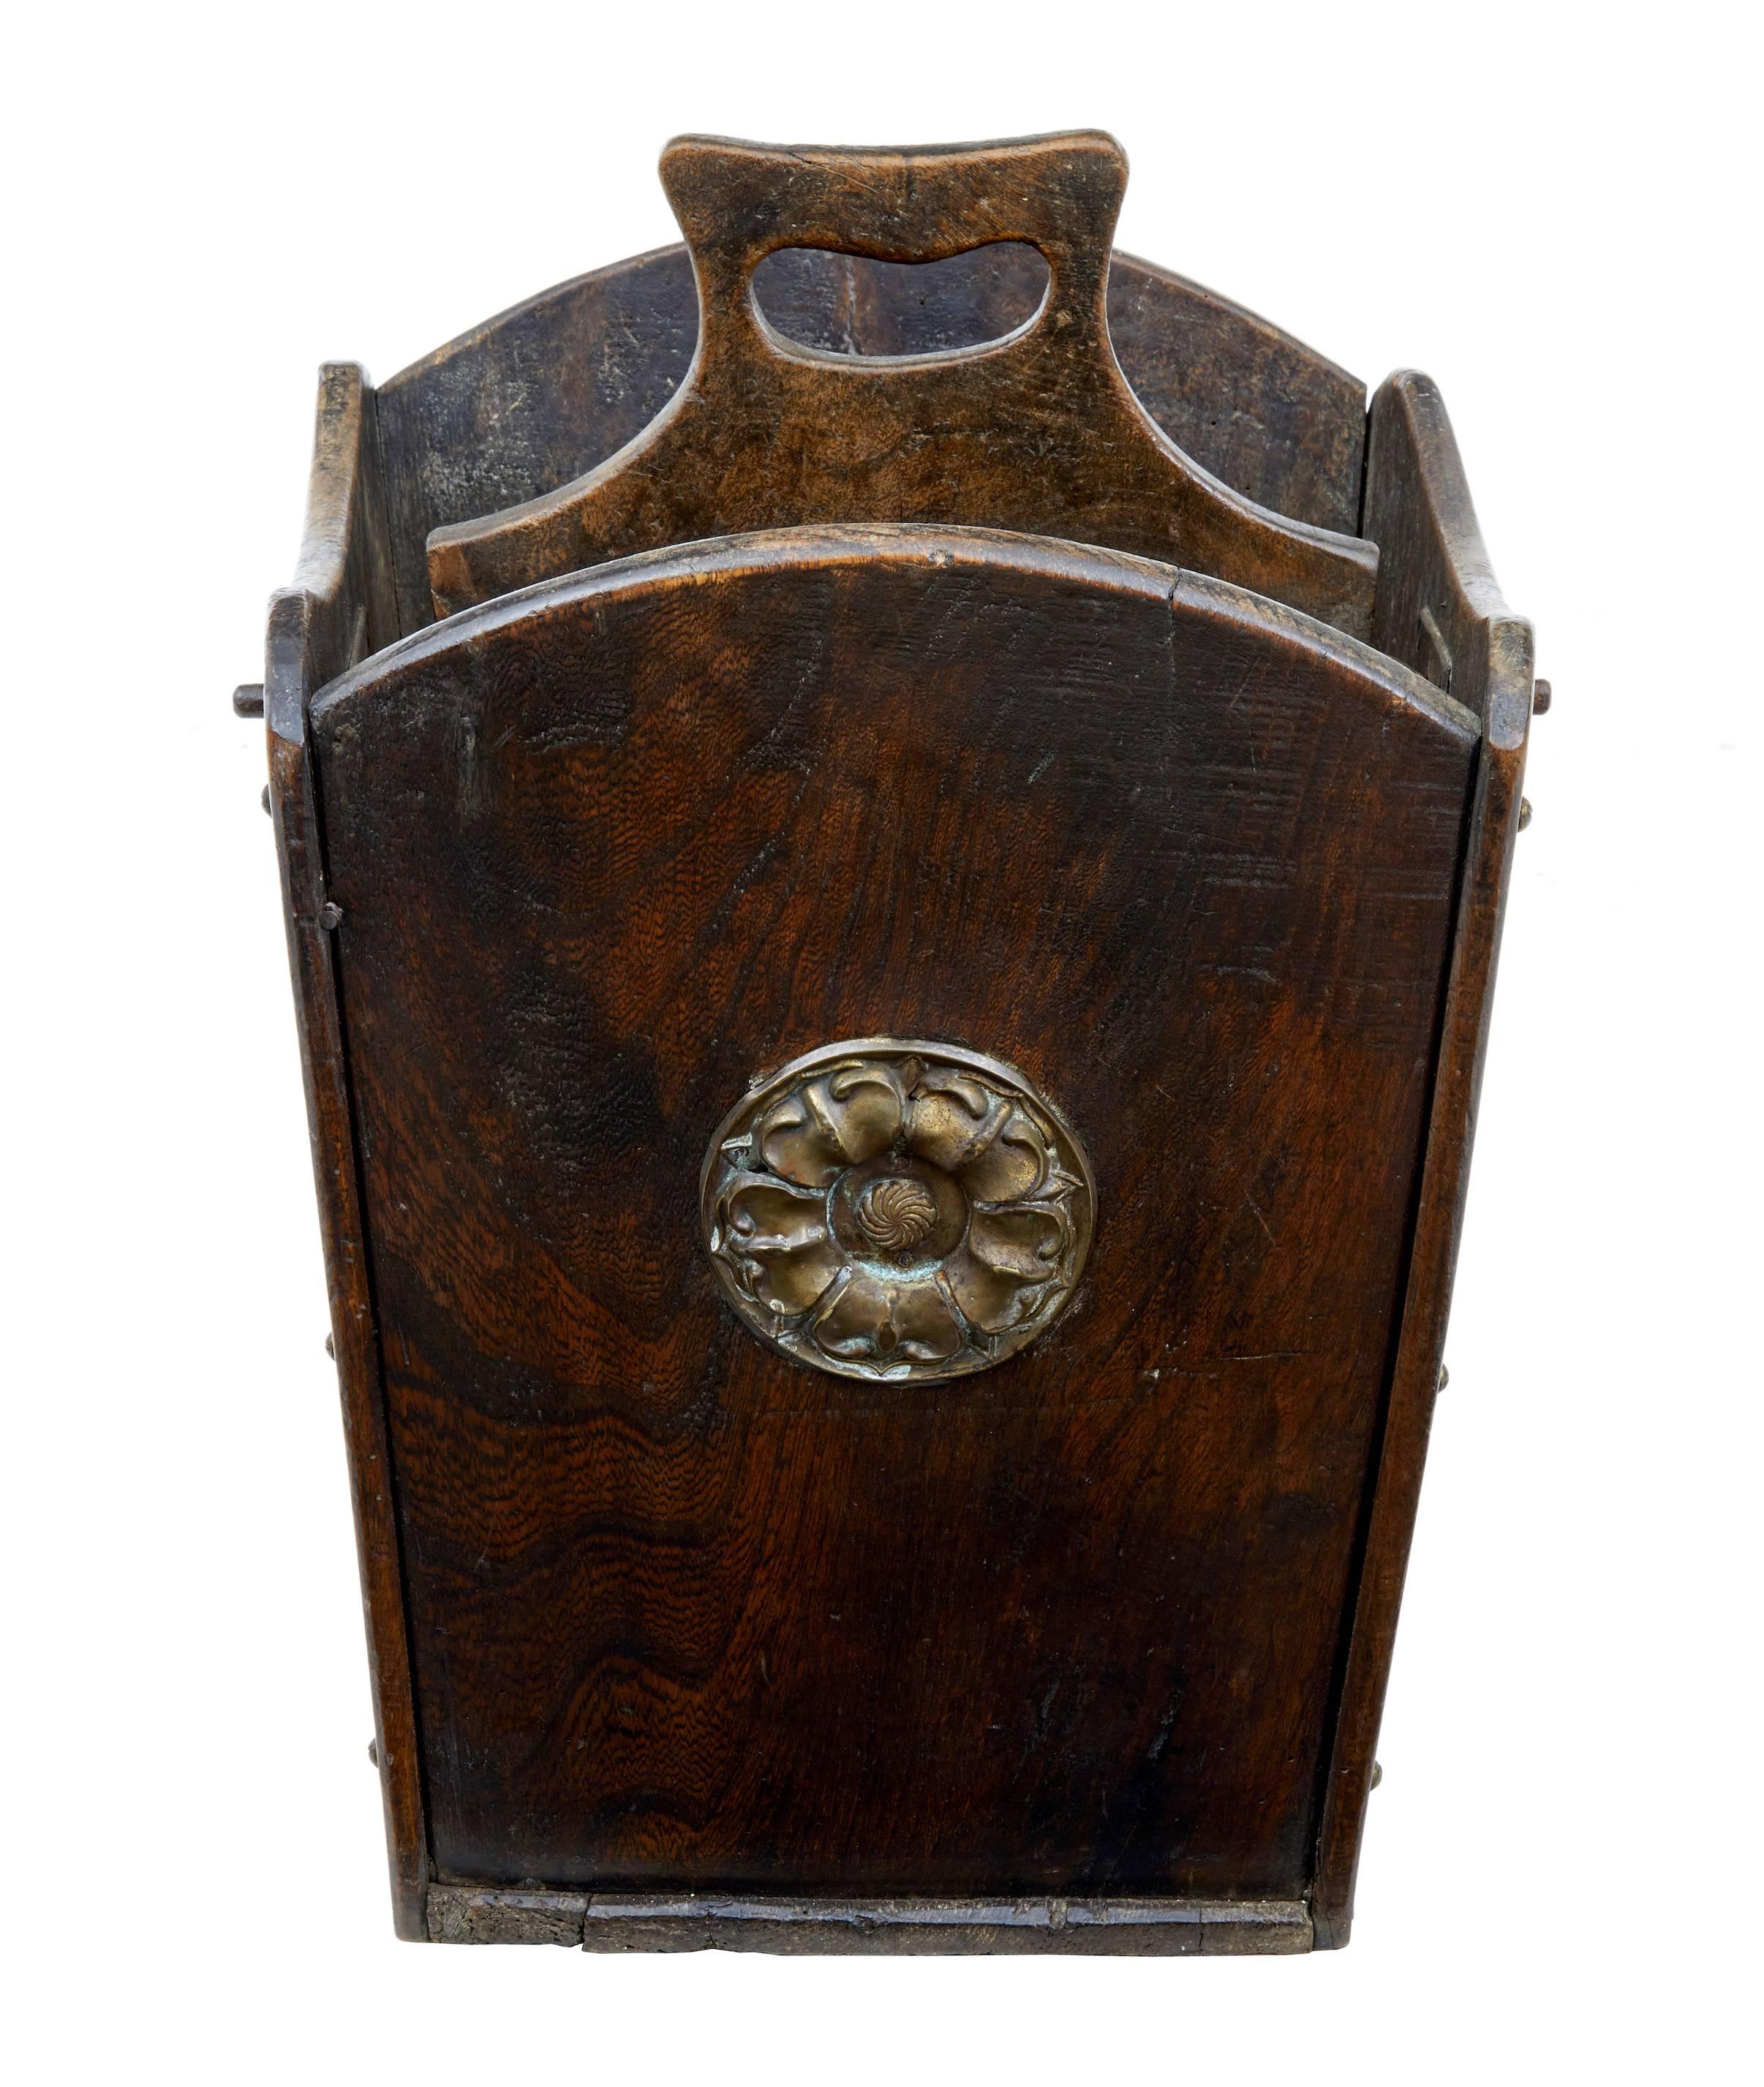 Unusual Irish peat bucket made from elm circa 1810
Gimbal handle with original metalwork.
Brass applied decorative metalwork.
Colored dark.

Height: 17